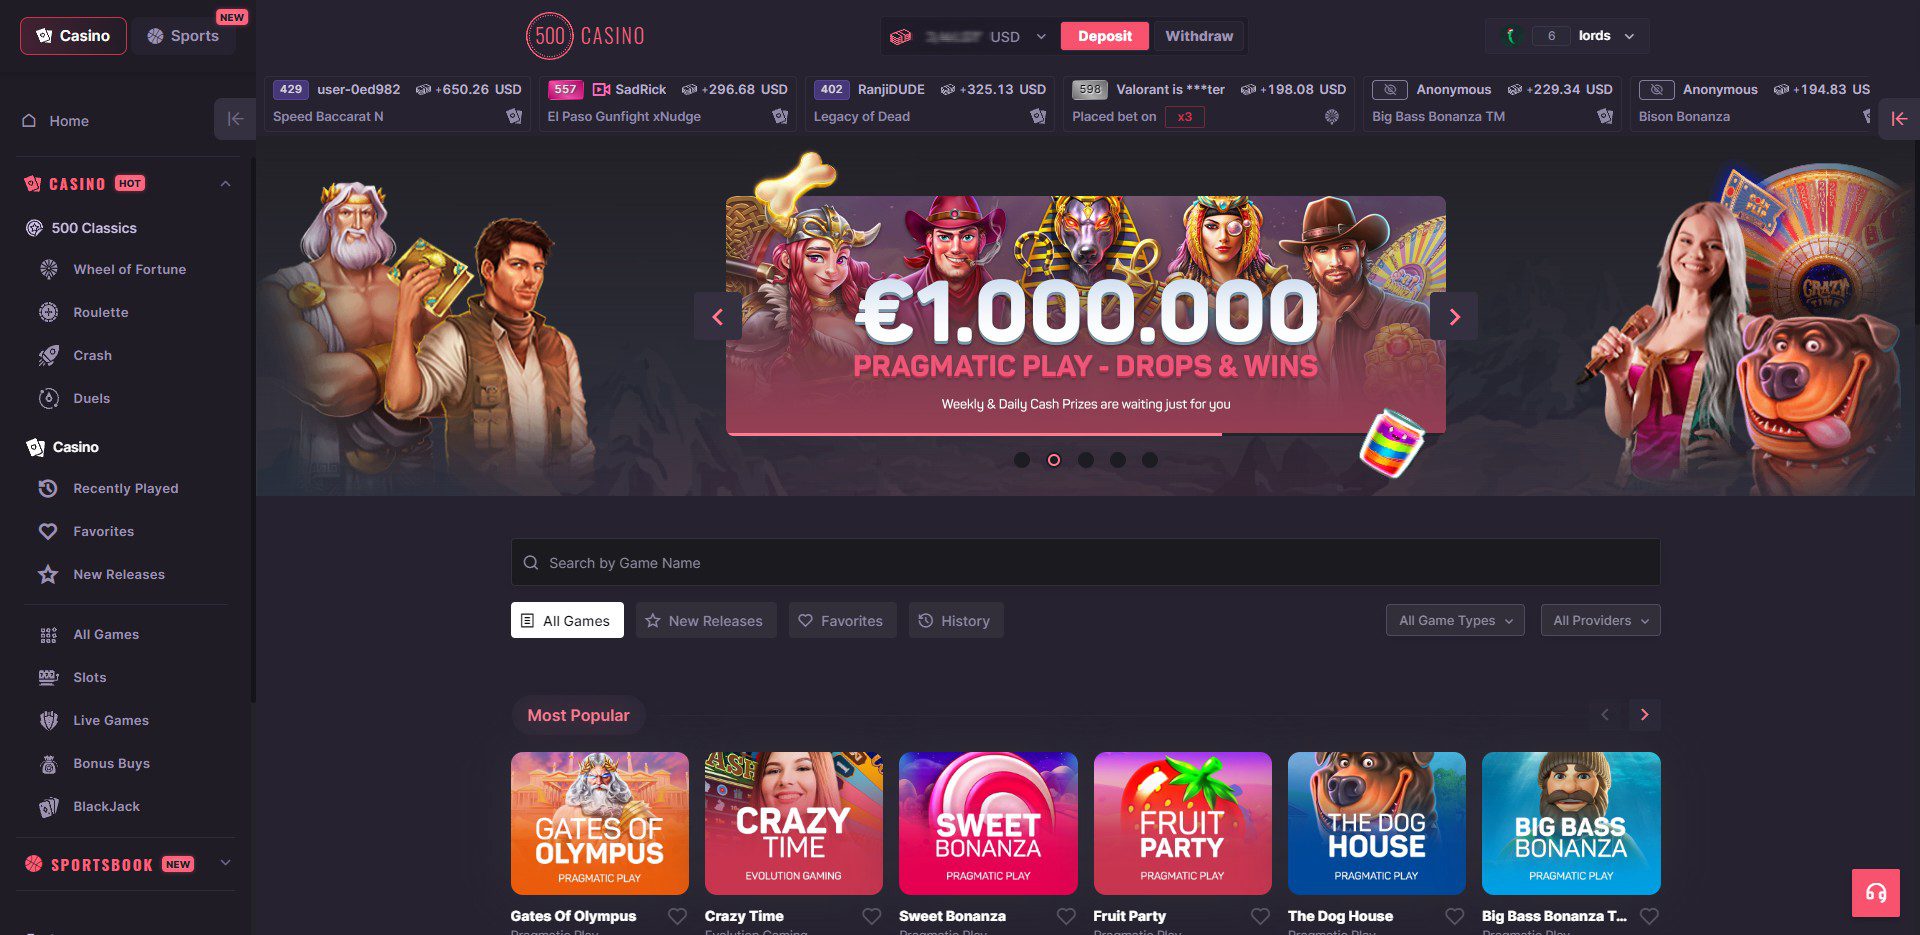 500 Casino Live Casino Games Overview